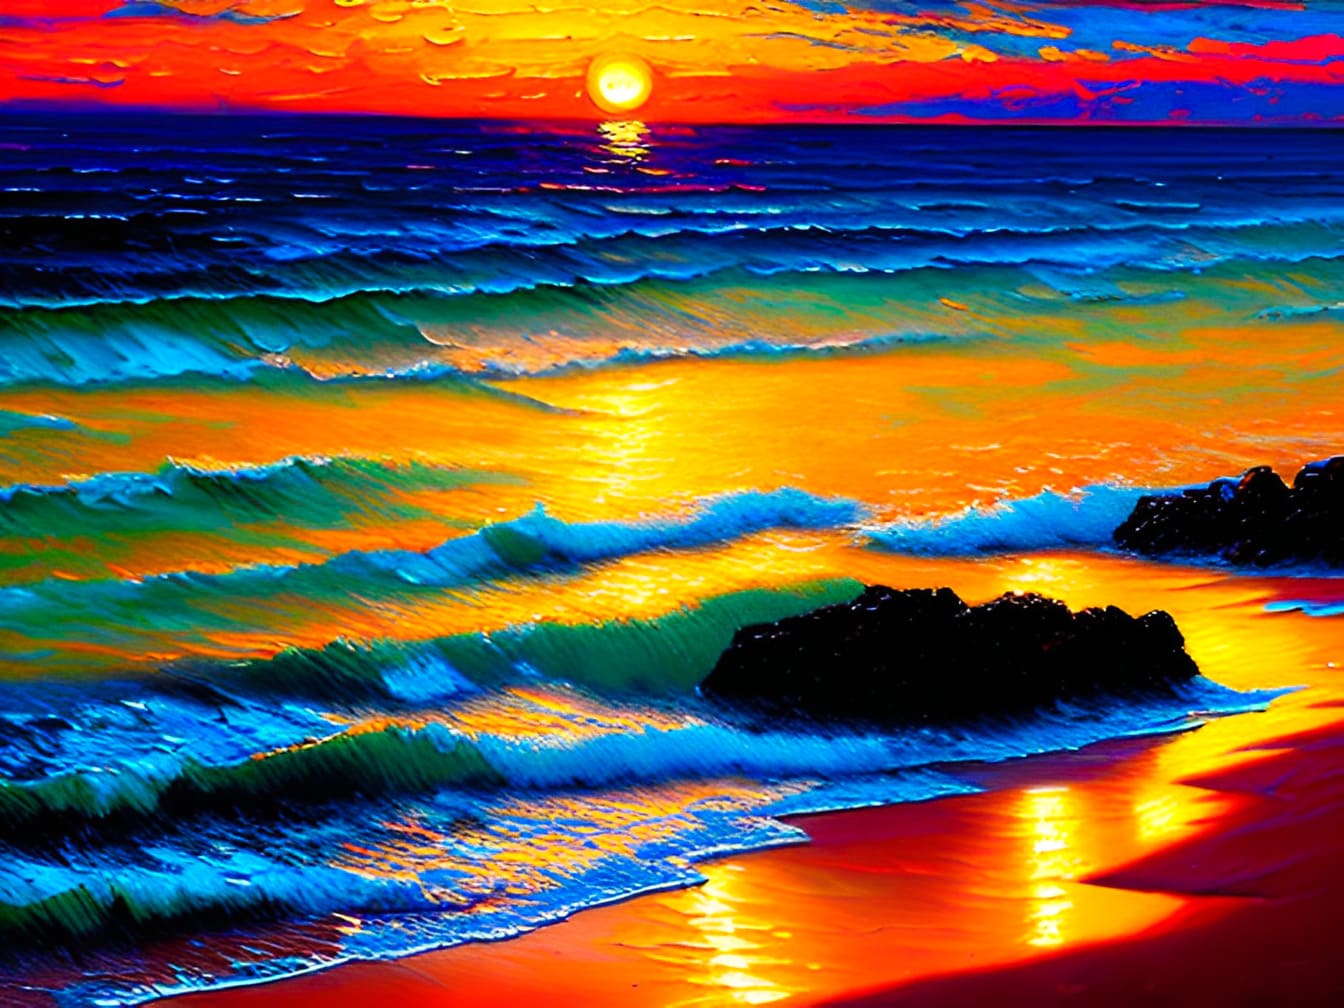 Vivid colors of sunset on seaside, oil painting computer artwork